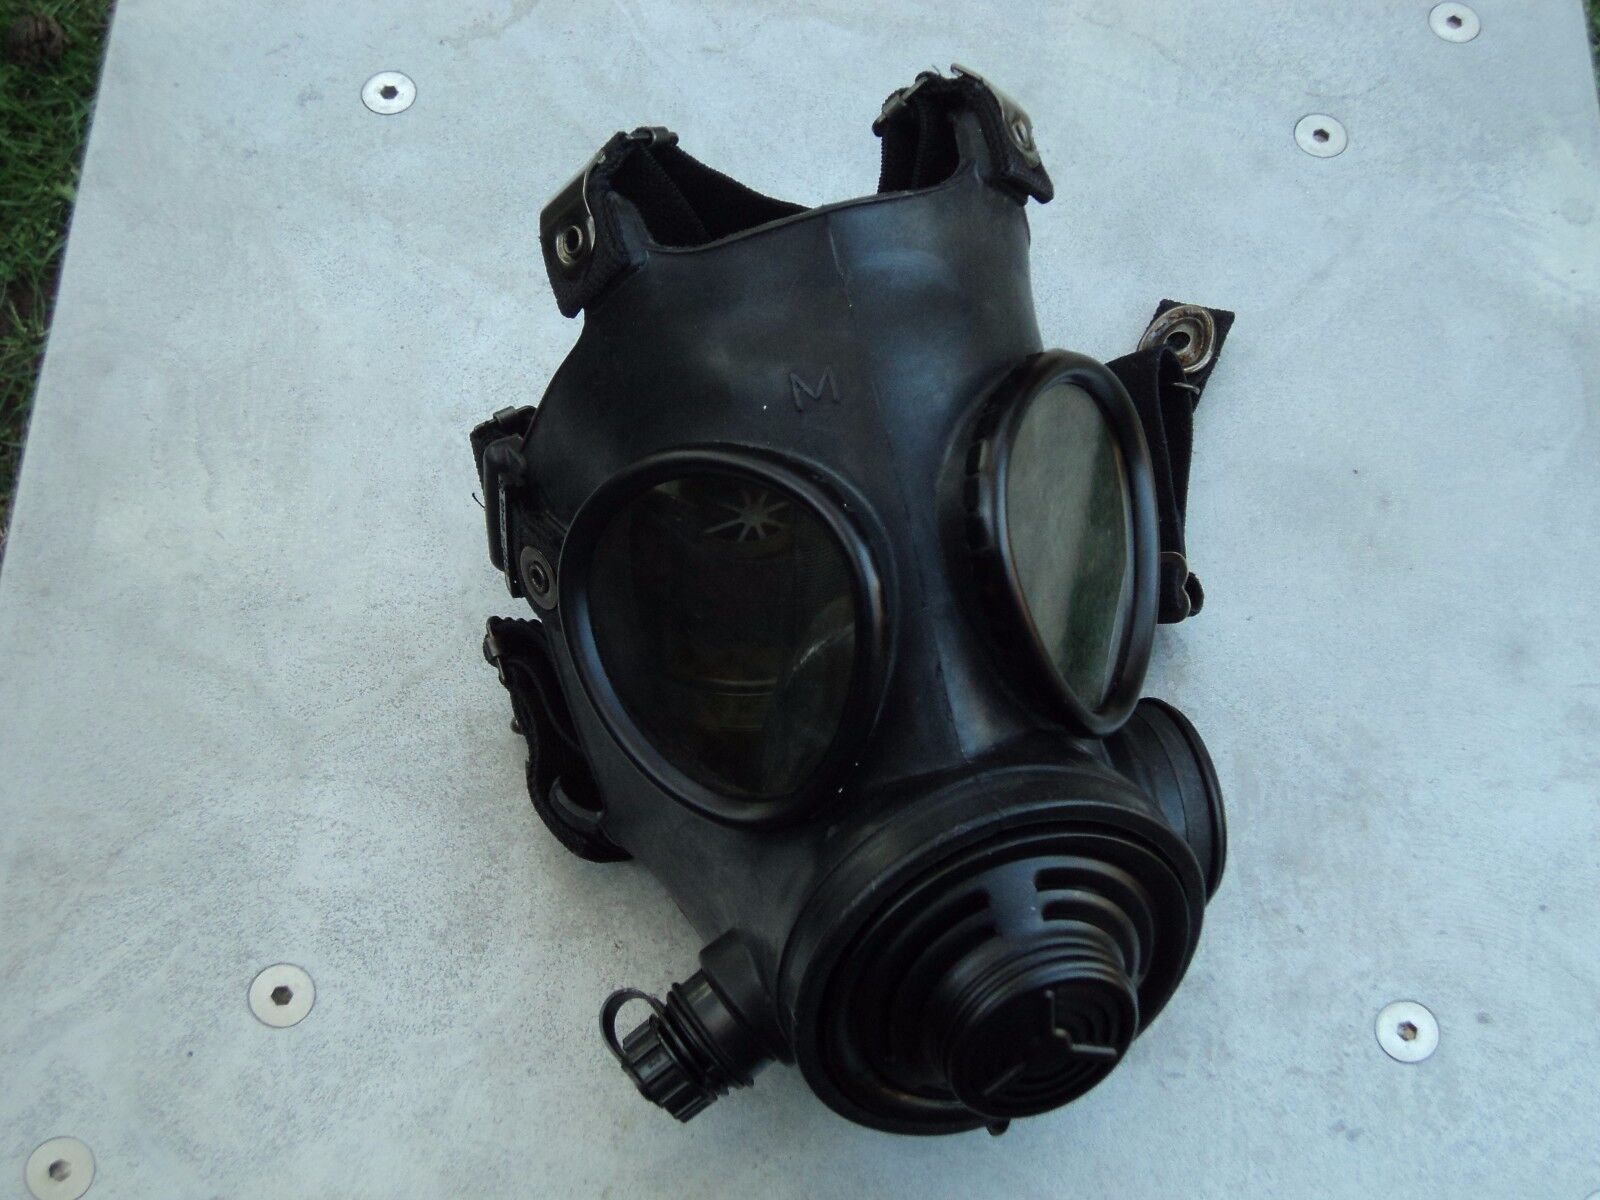 Military 40mm NATO Gas Mask w/Drink Port & Protective Hood, Size Med/Reg UNUSED